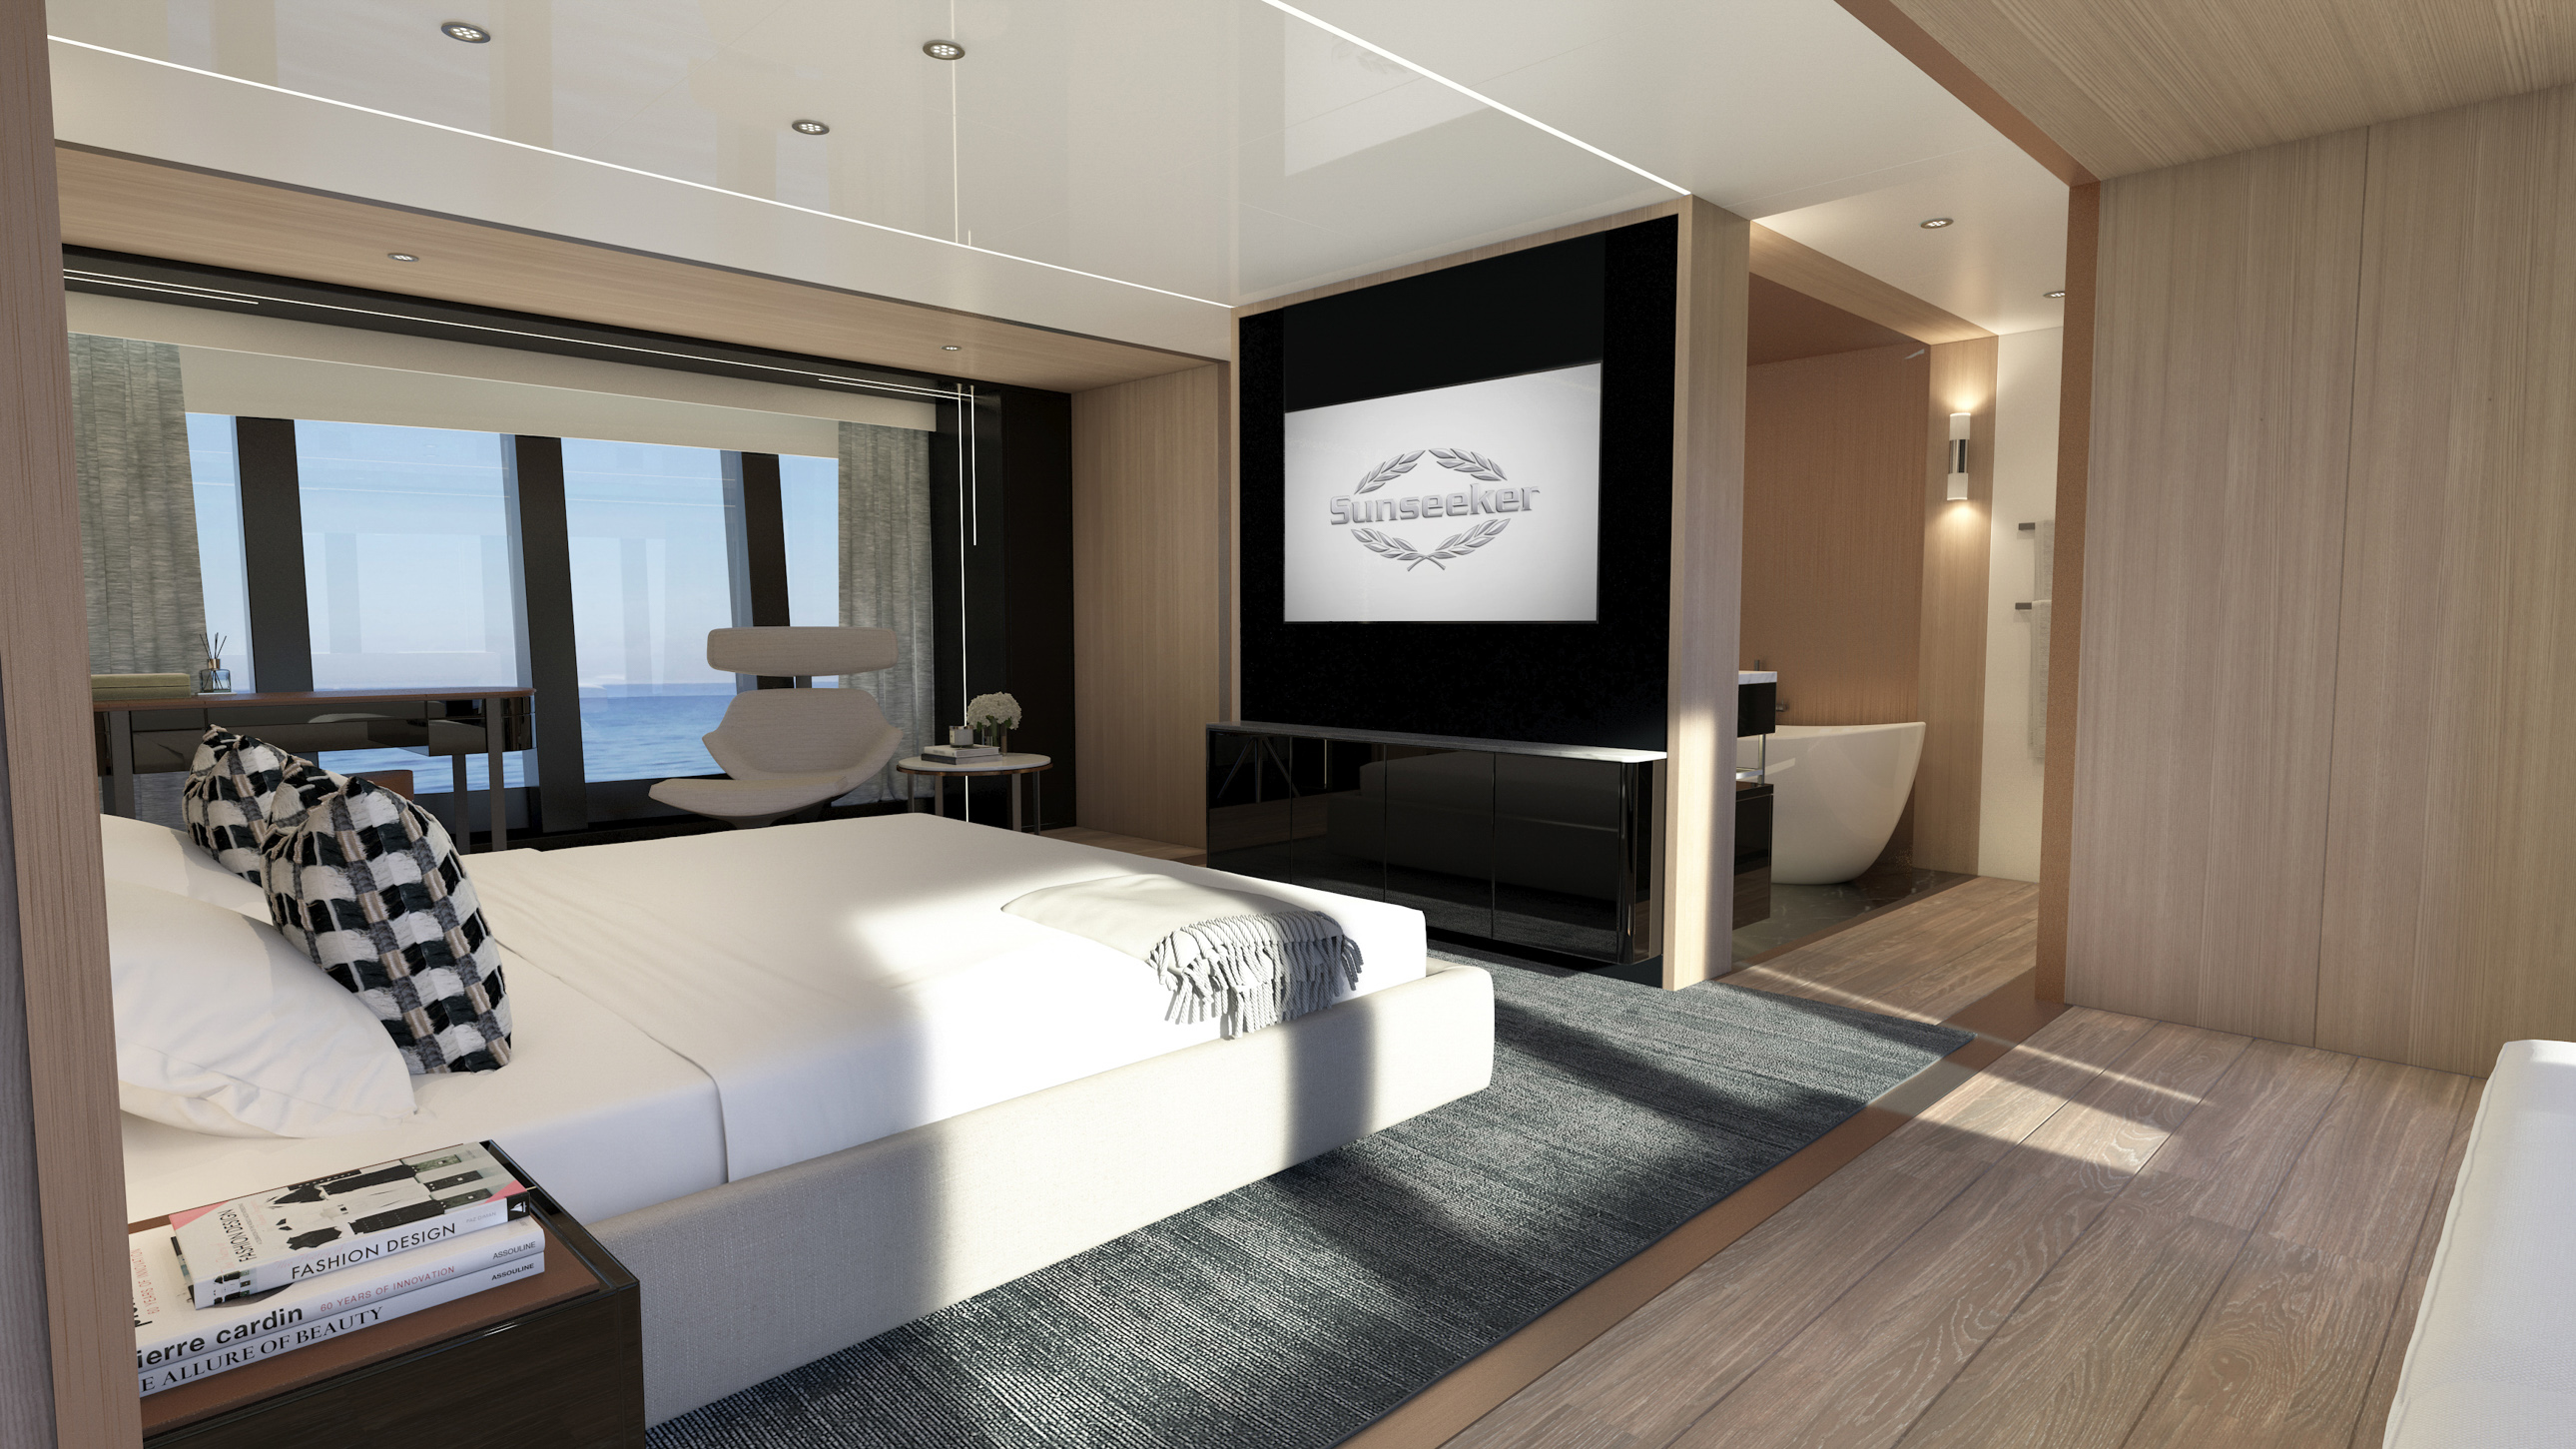 Sunseeker 42m Ocean Master Bedroom ARC CGI